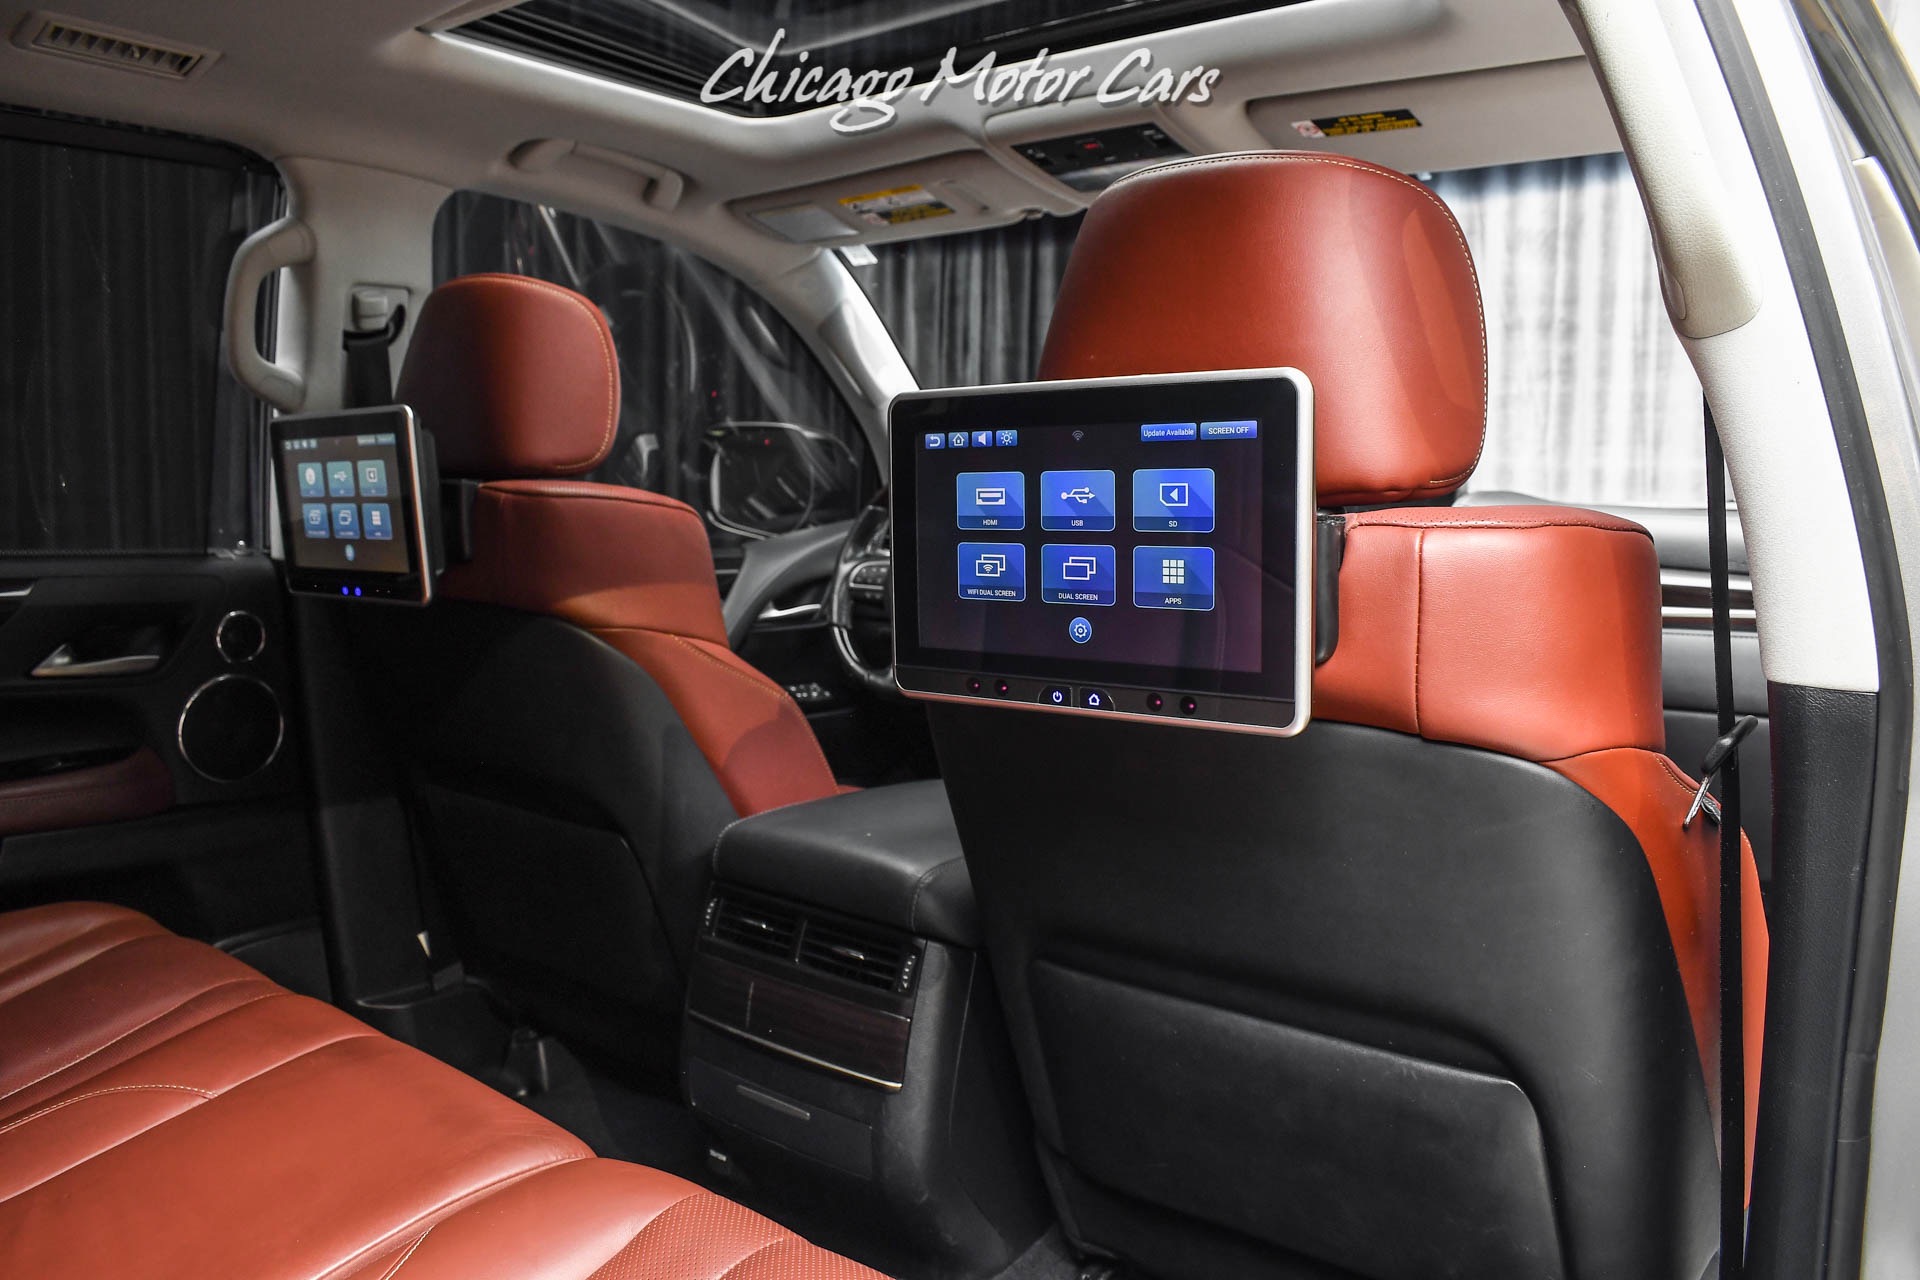 Used-2017-Lexus-LX-570-SUV-Stunning-Color-Combo-Mark-Levinson-Audio-Rear-Entertainment-LOADED